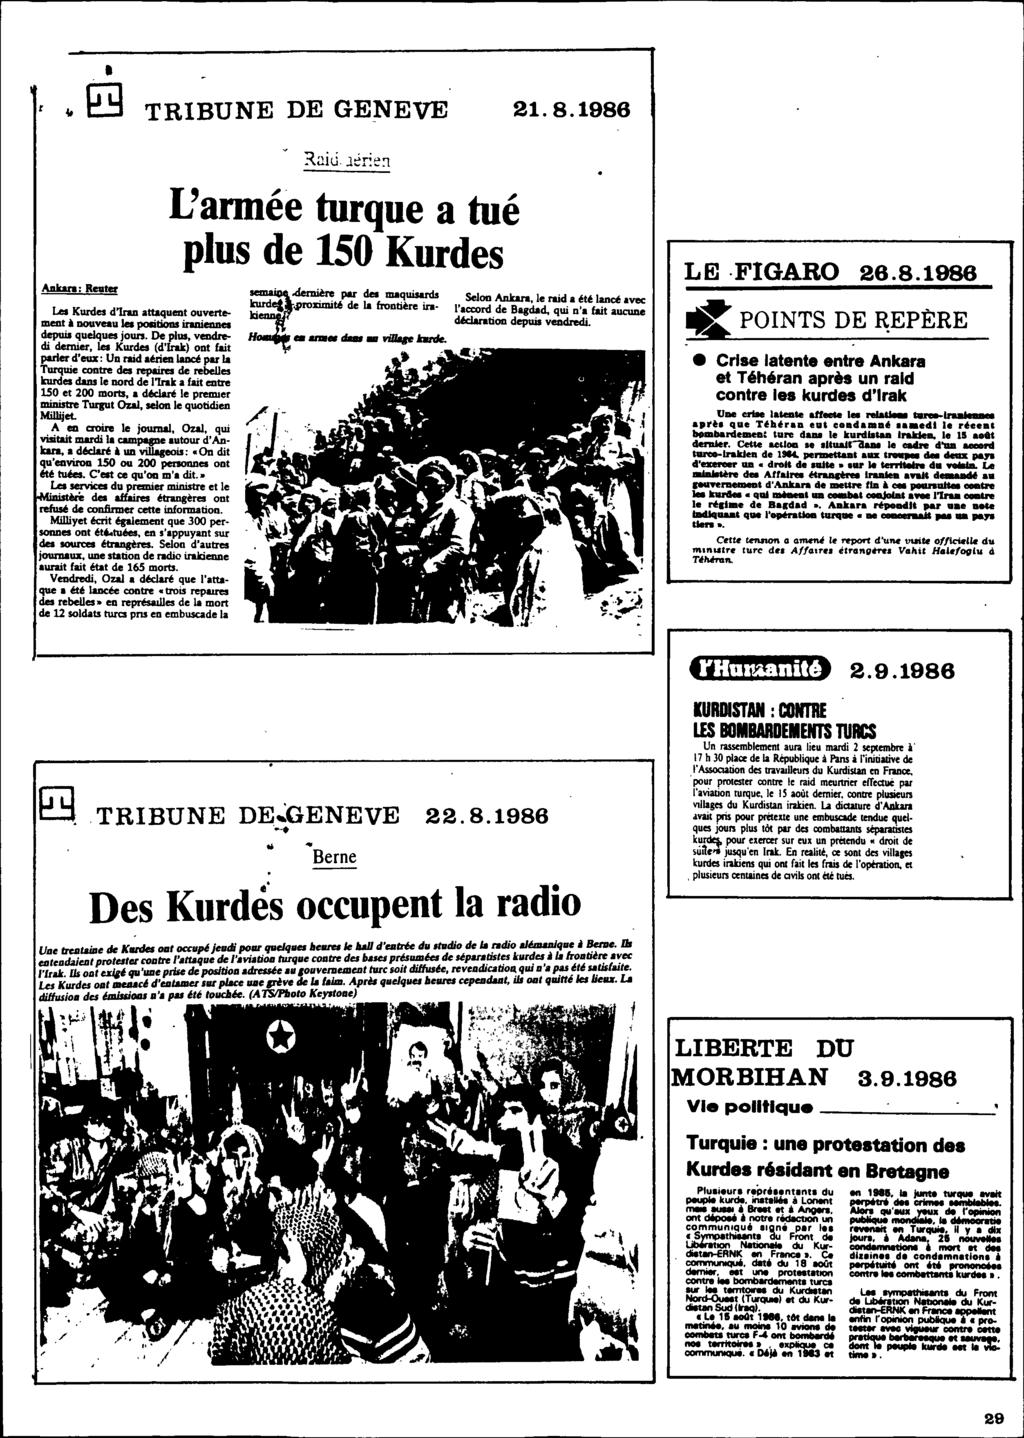 41 ~ TRIBUNE DE GE'NEVE 21. 8.1986 ADkara: Reater lei Kurdes d'iran attaquent ouverte- IIIeIlt nouveau les poiitiods iranieana depuii quelques joun.